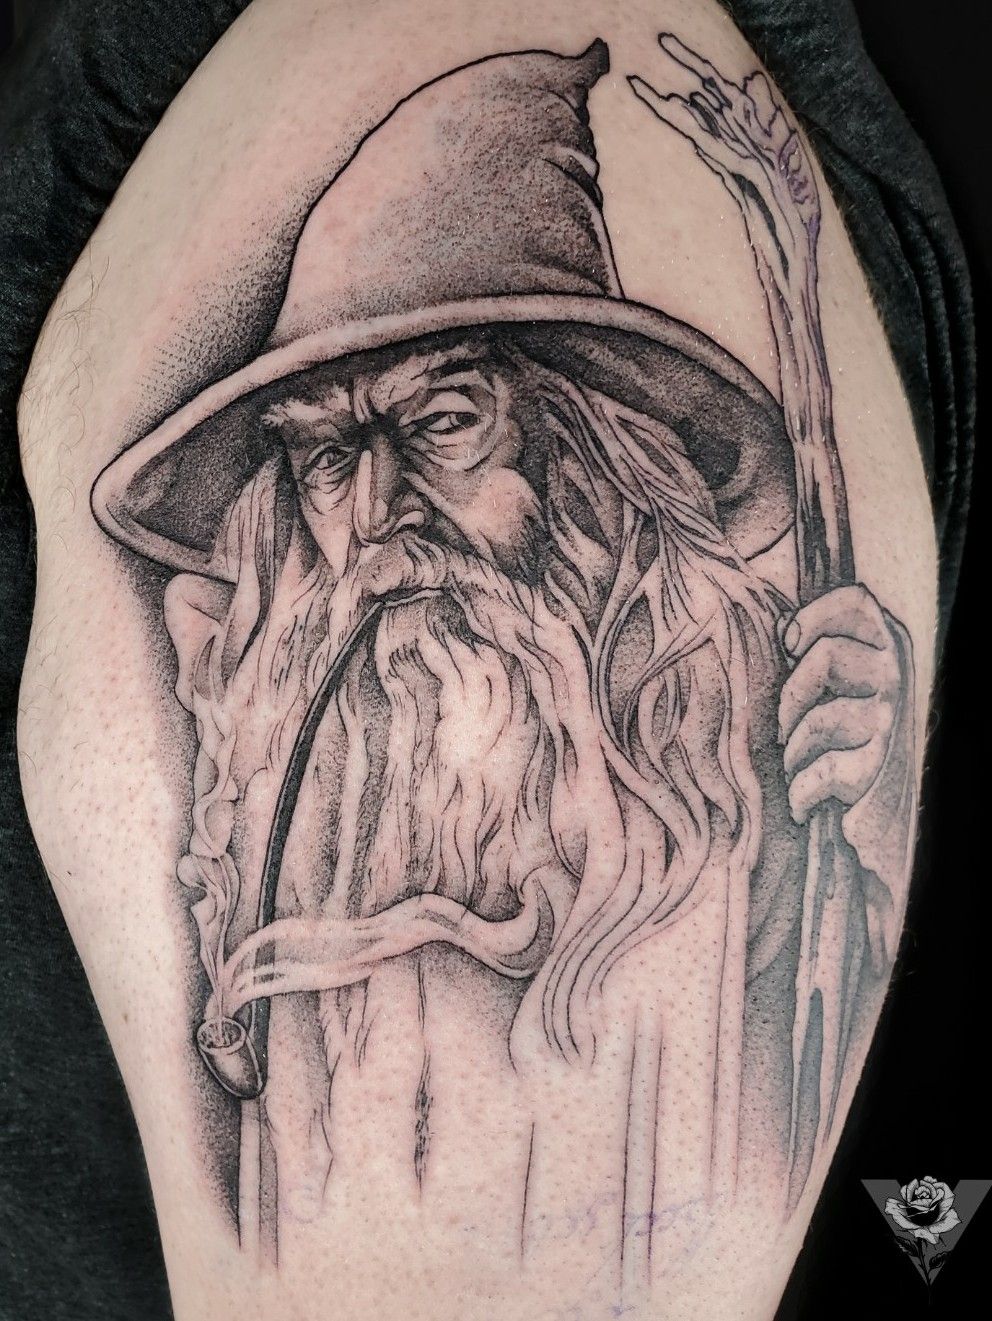 Tattoo of Wizards Fantasy Trees